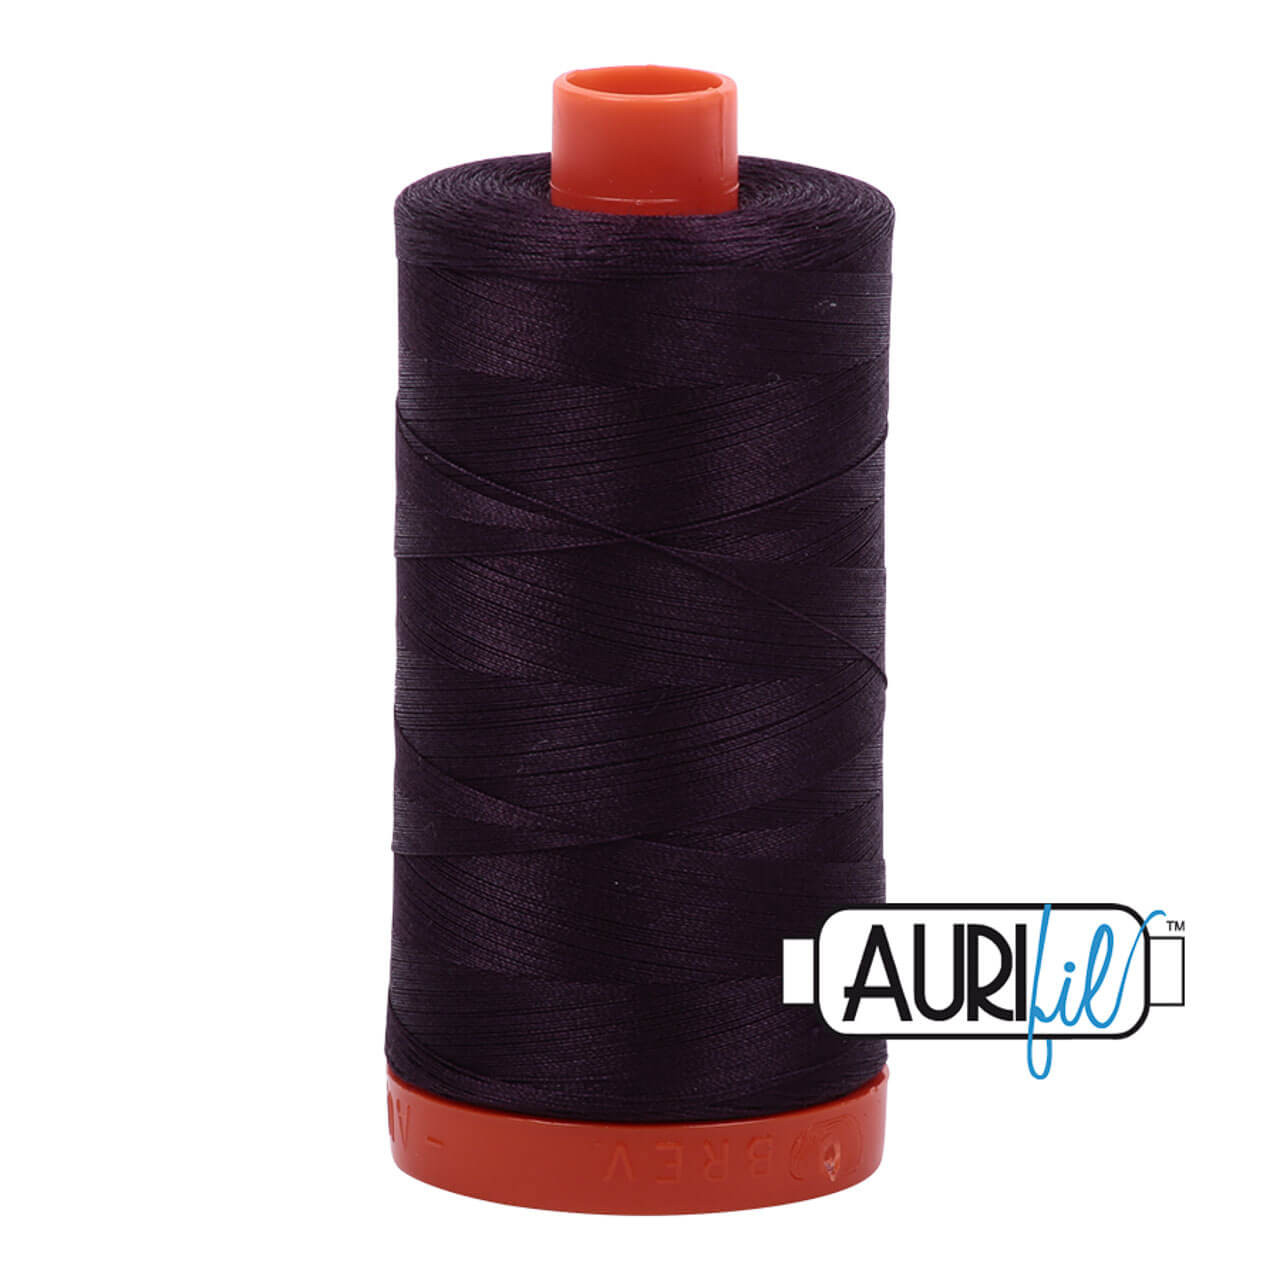 A large spool of Aurifil Aubergine 50wt Egyptian cotton thread in dark purple with Aurifil logo